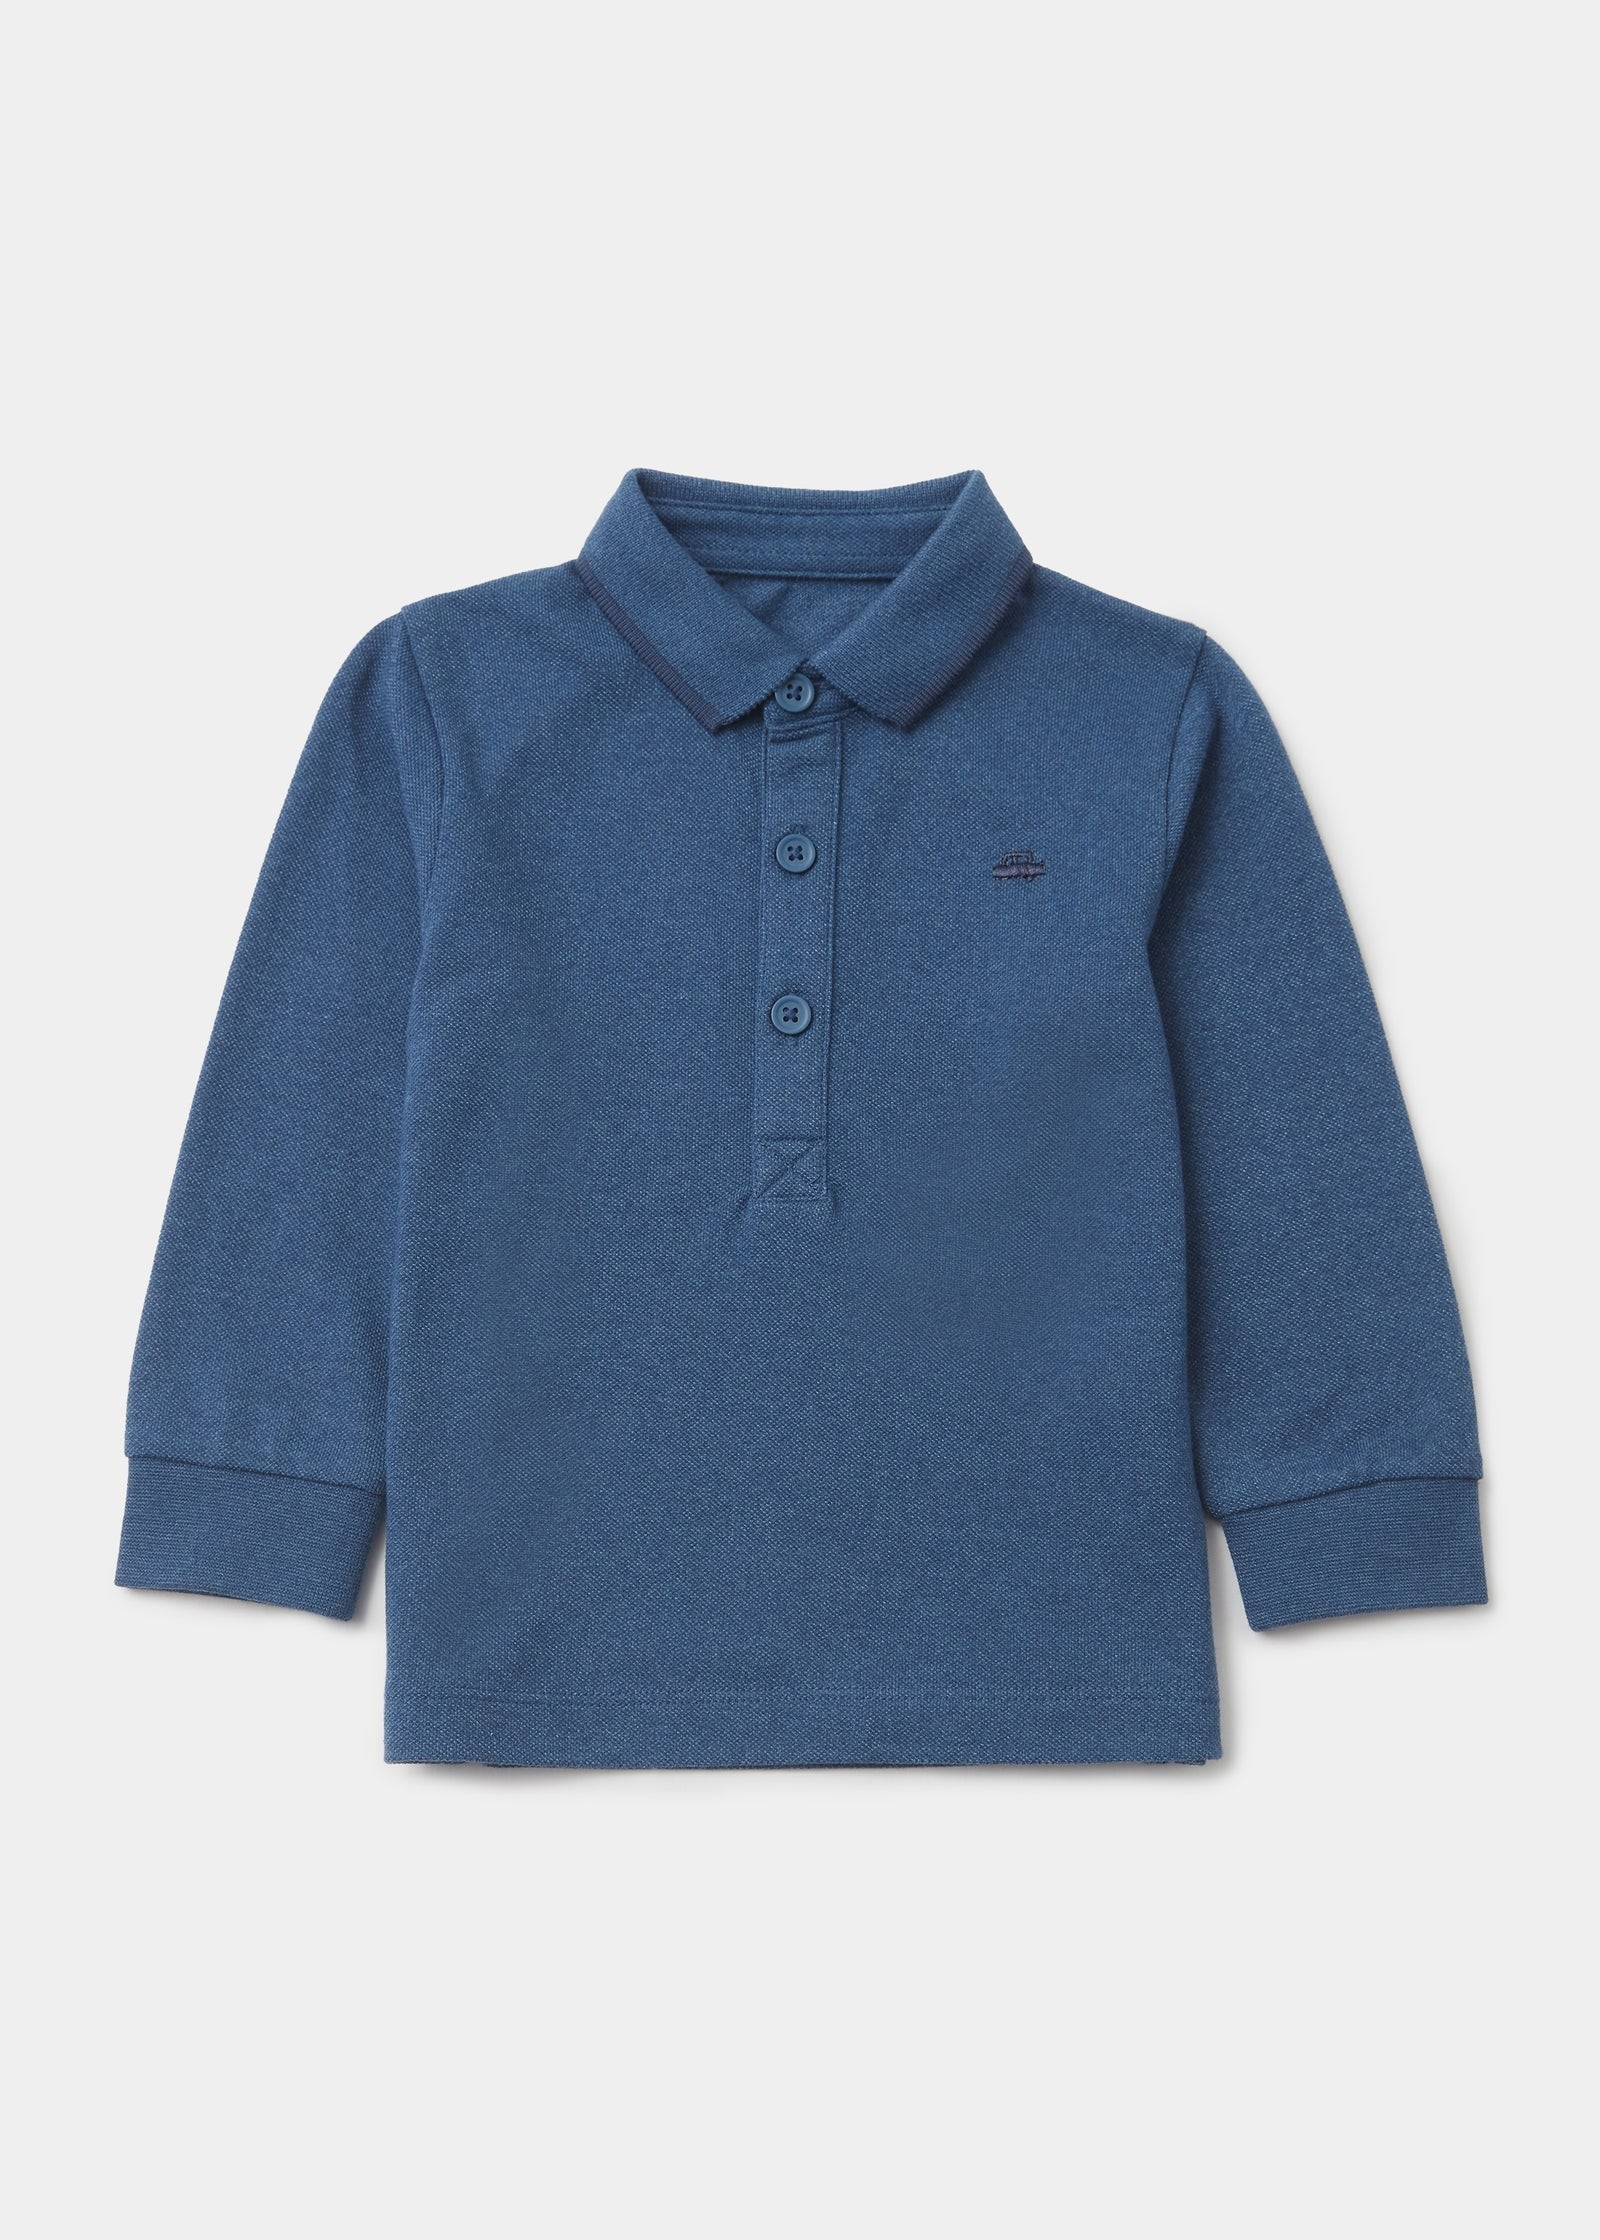 Kids Bluey Teal Long Sleeve T-Shirt (9mths-6yrs) - Matalan